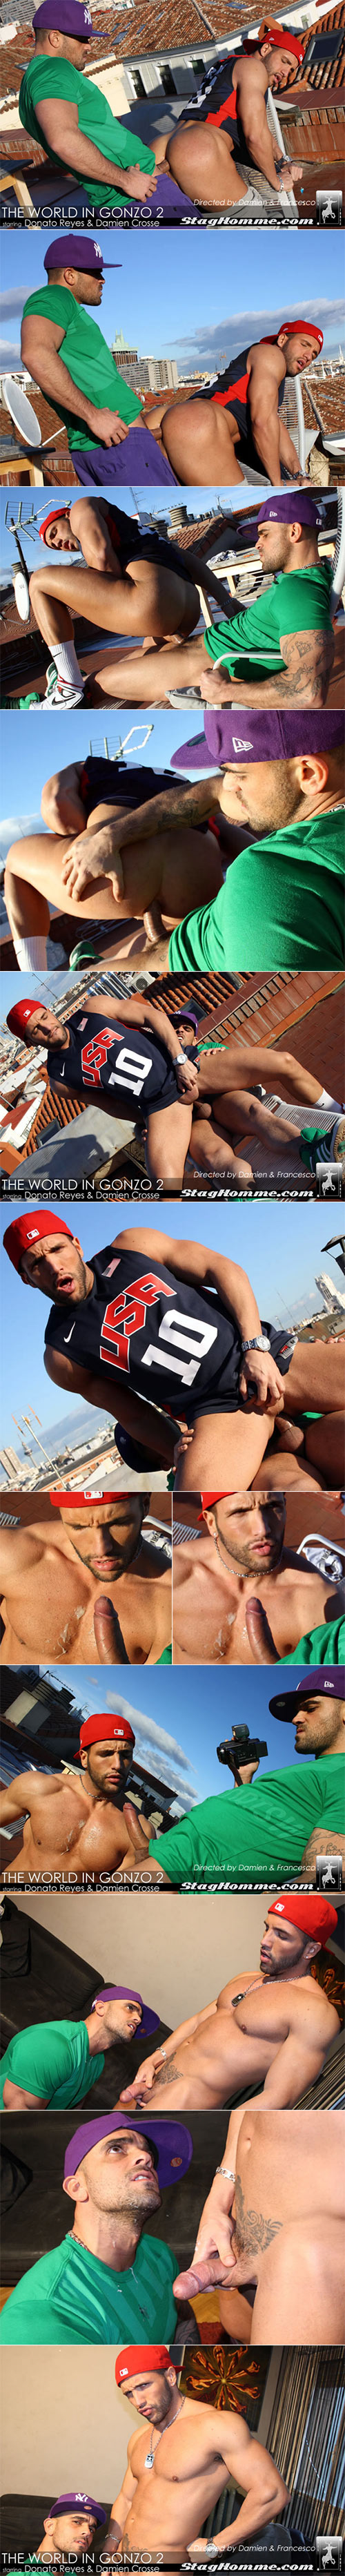 StagHomme: Damien Crosse fucks muscle bottom Donato Reyes in “The World in Gonzo #2”